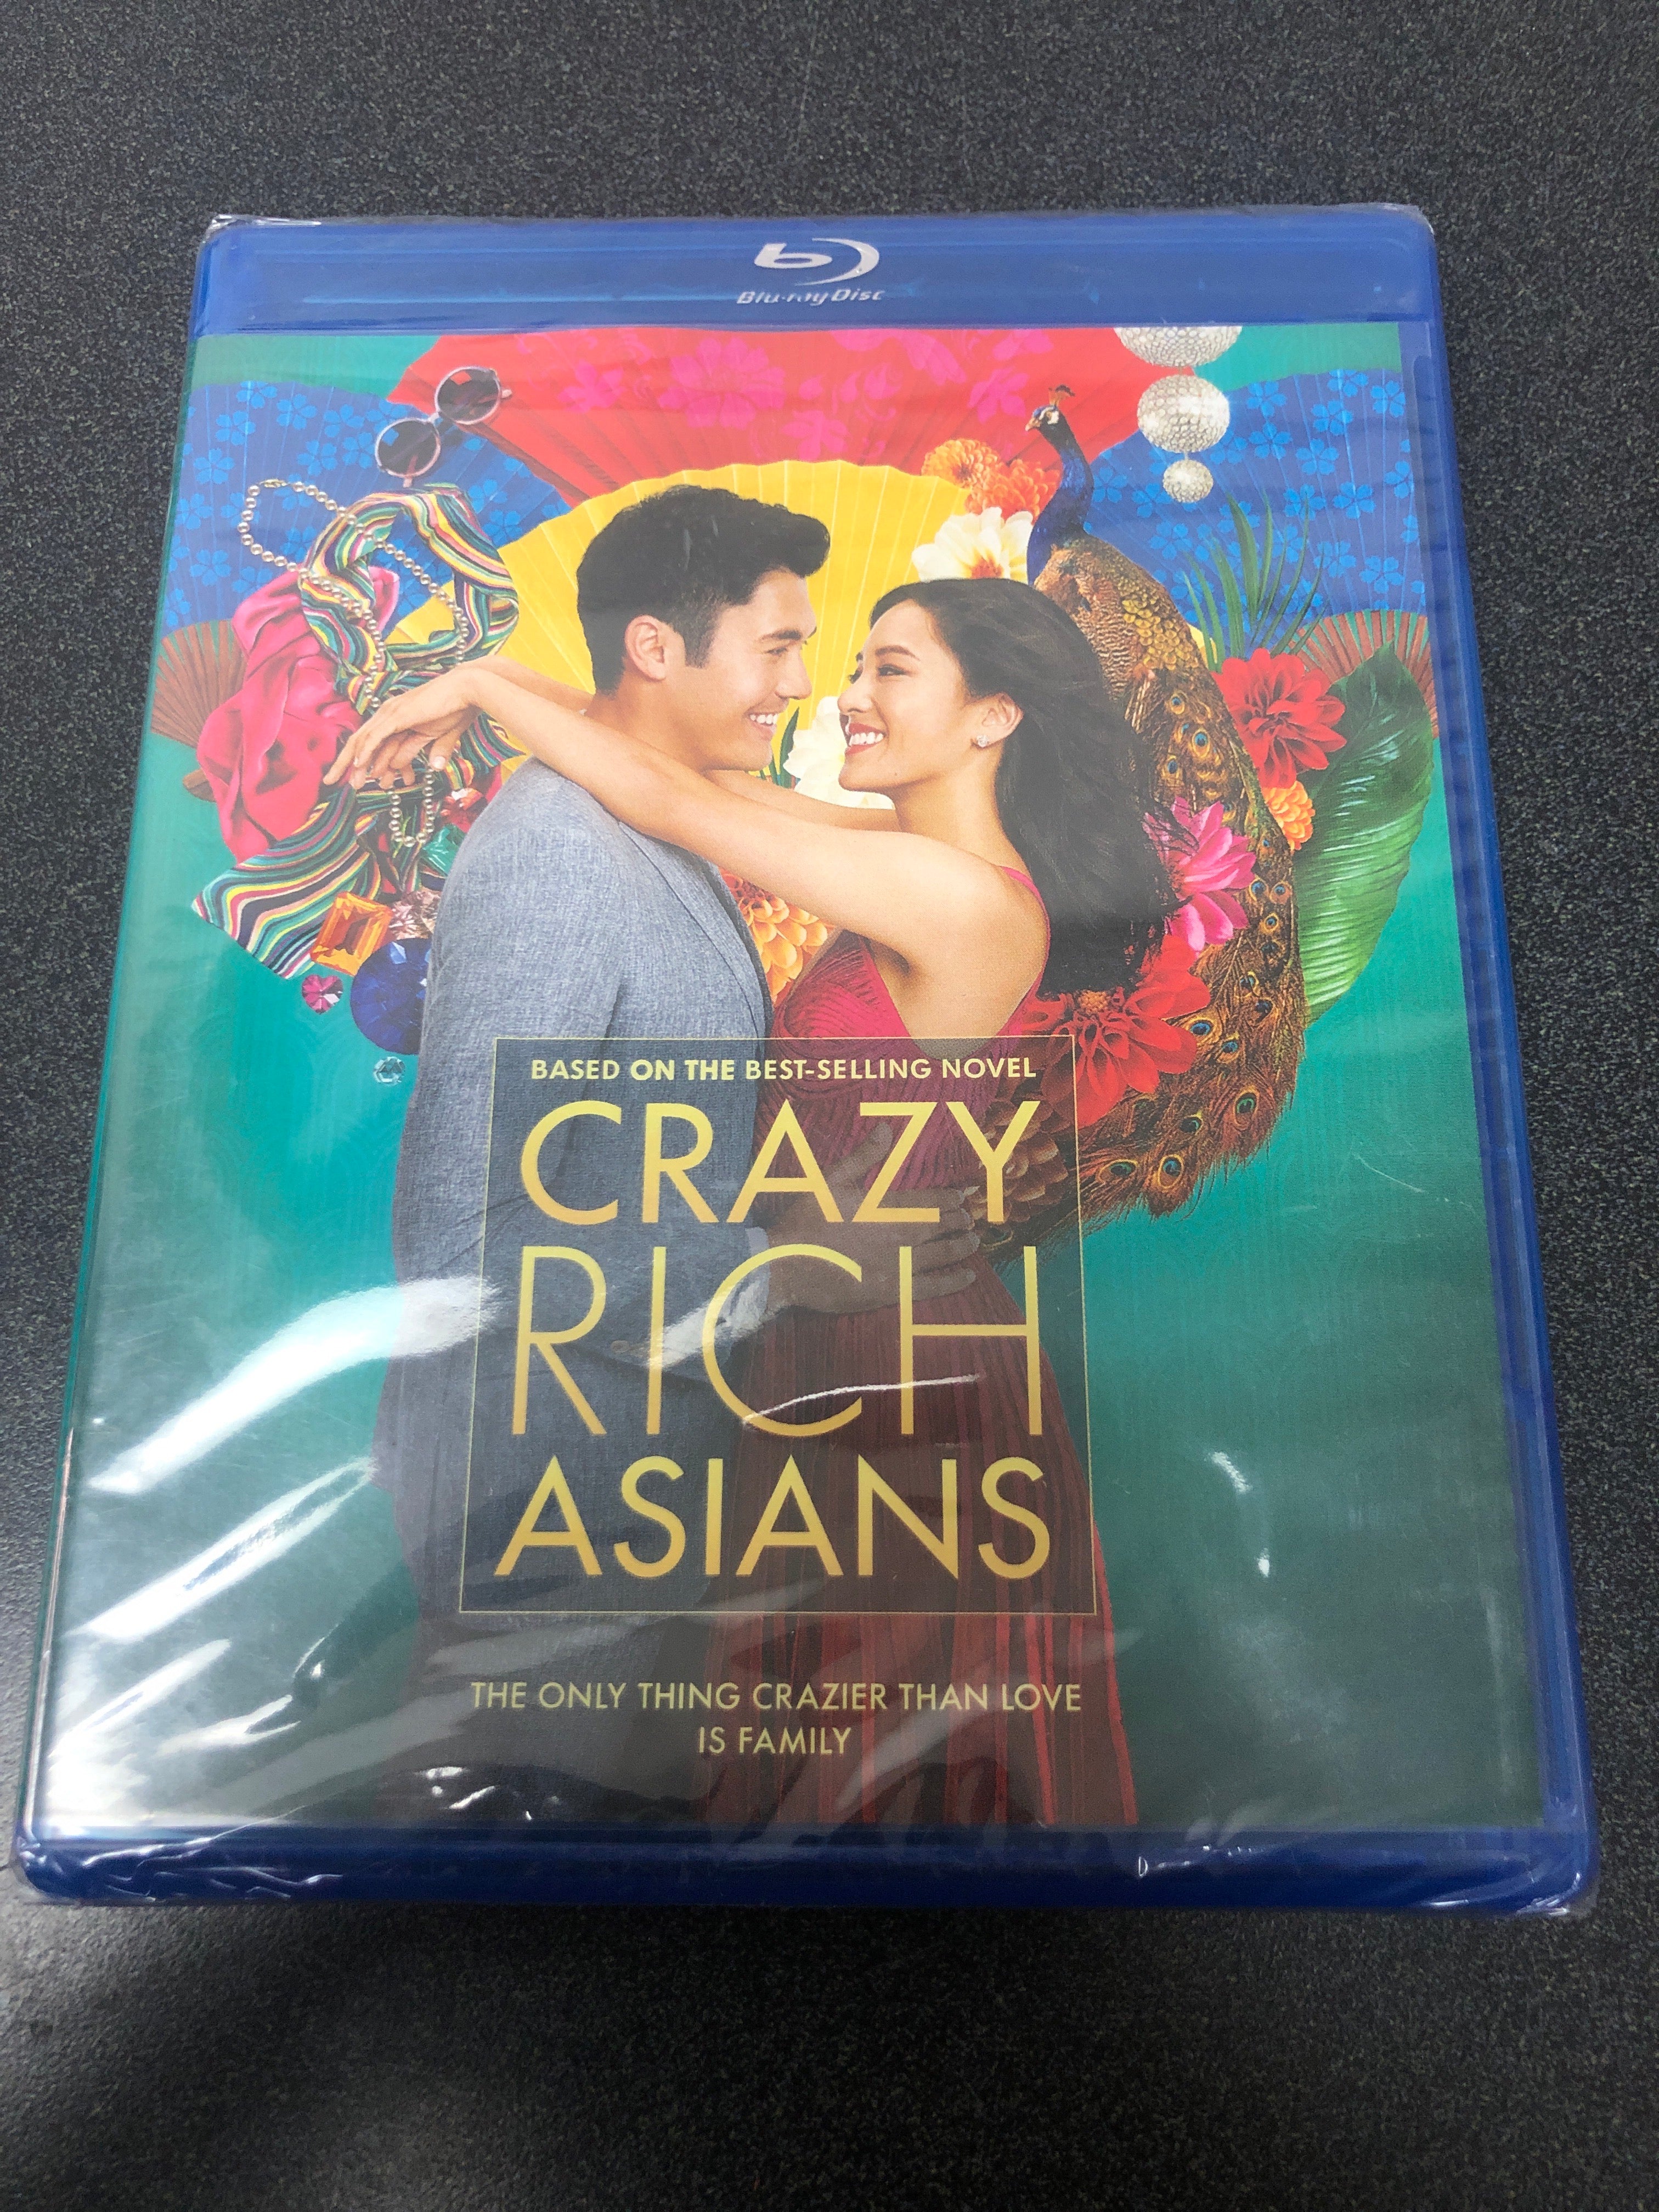 Crazy rich asians (other)